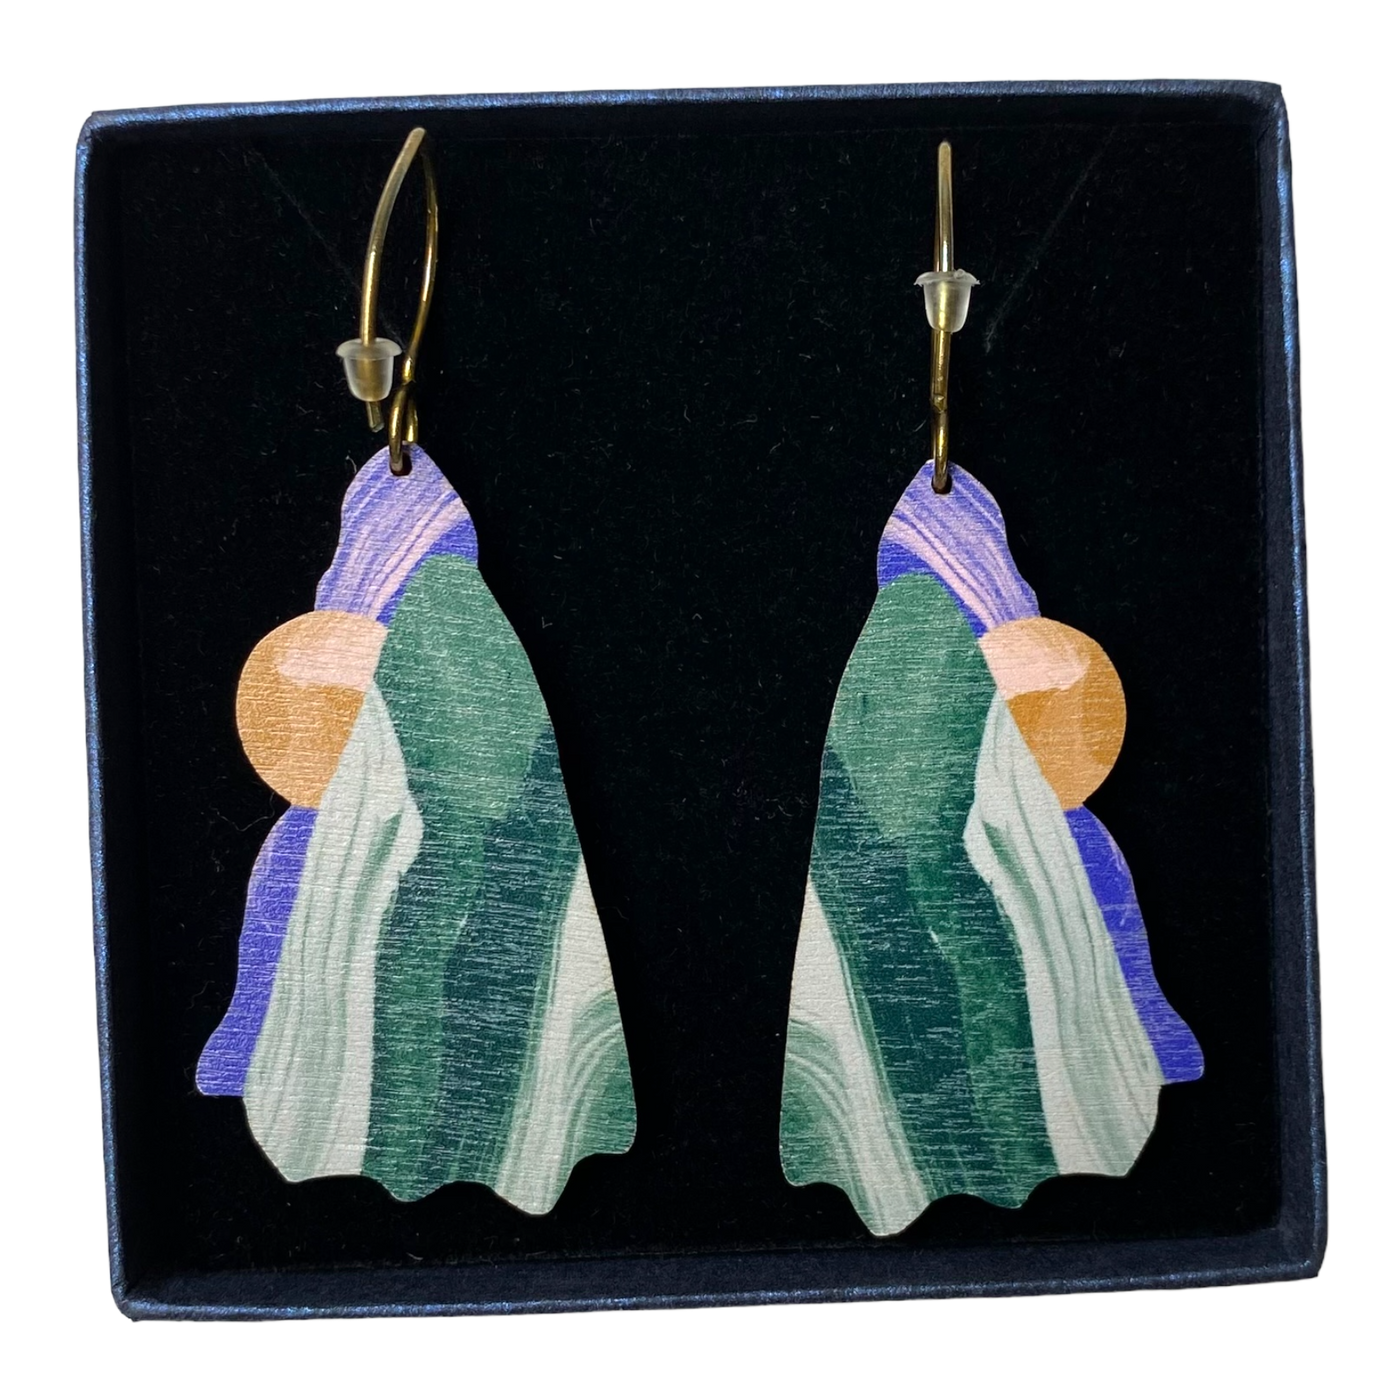 Morico mountains earrings, green